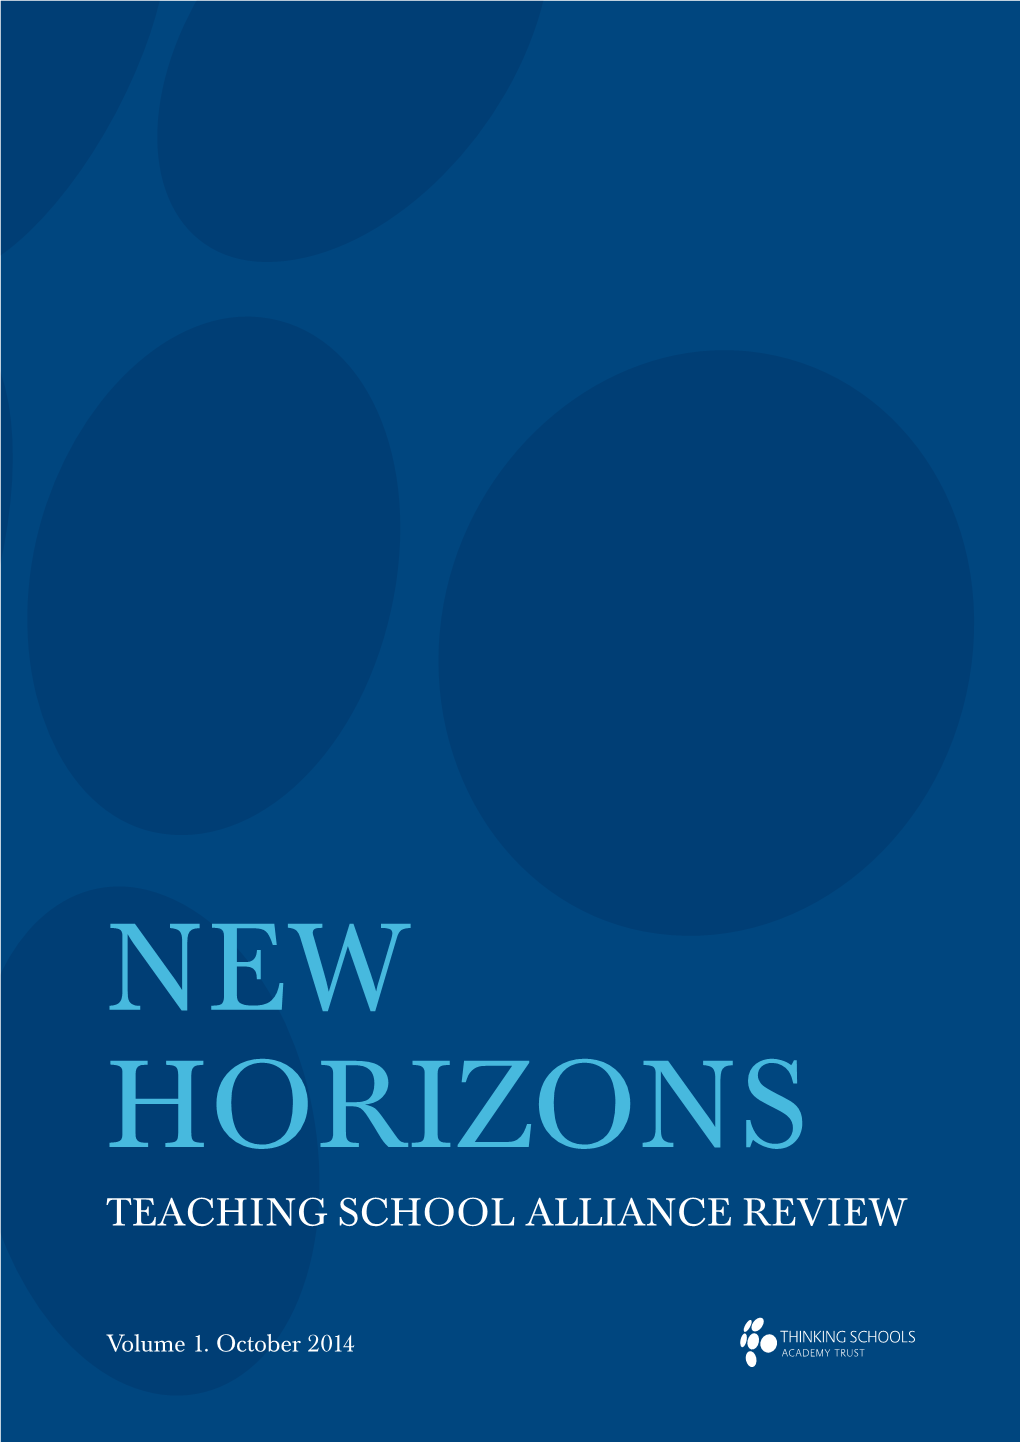 Teaching School Alliance Review